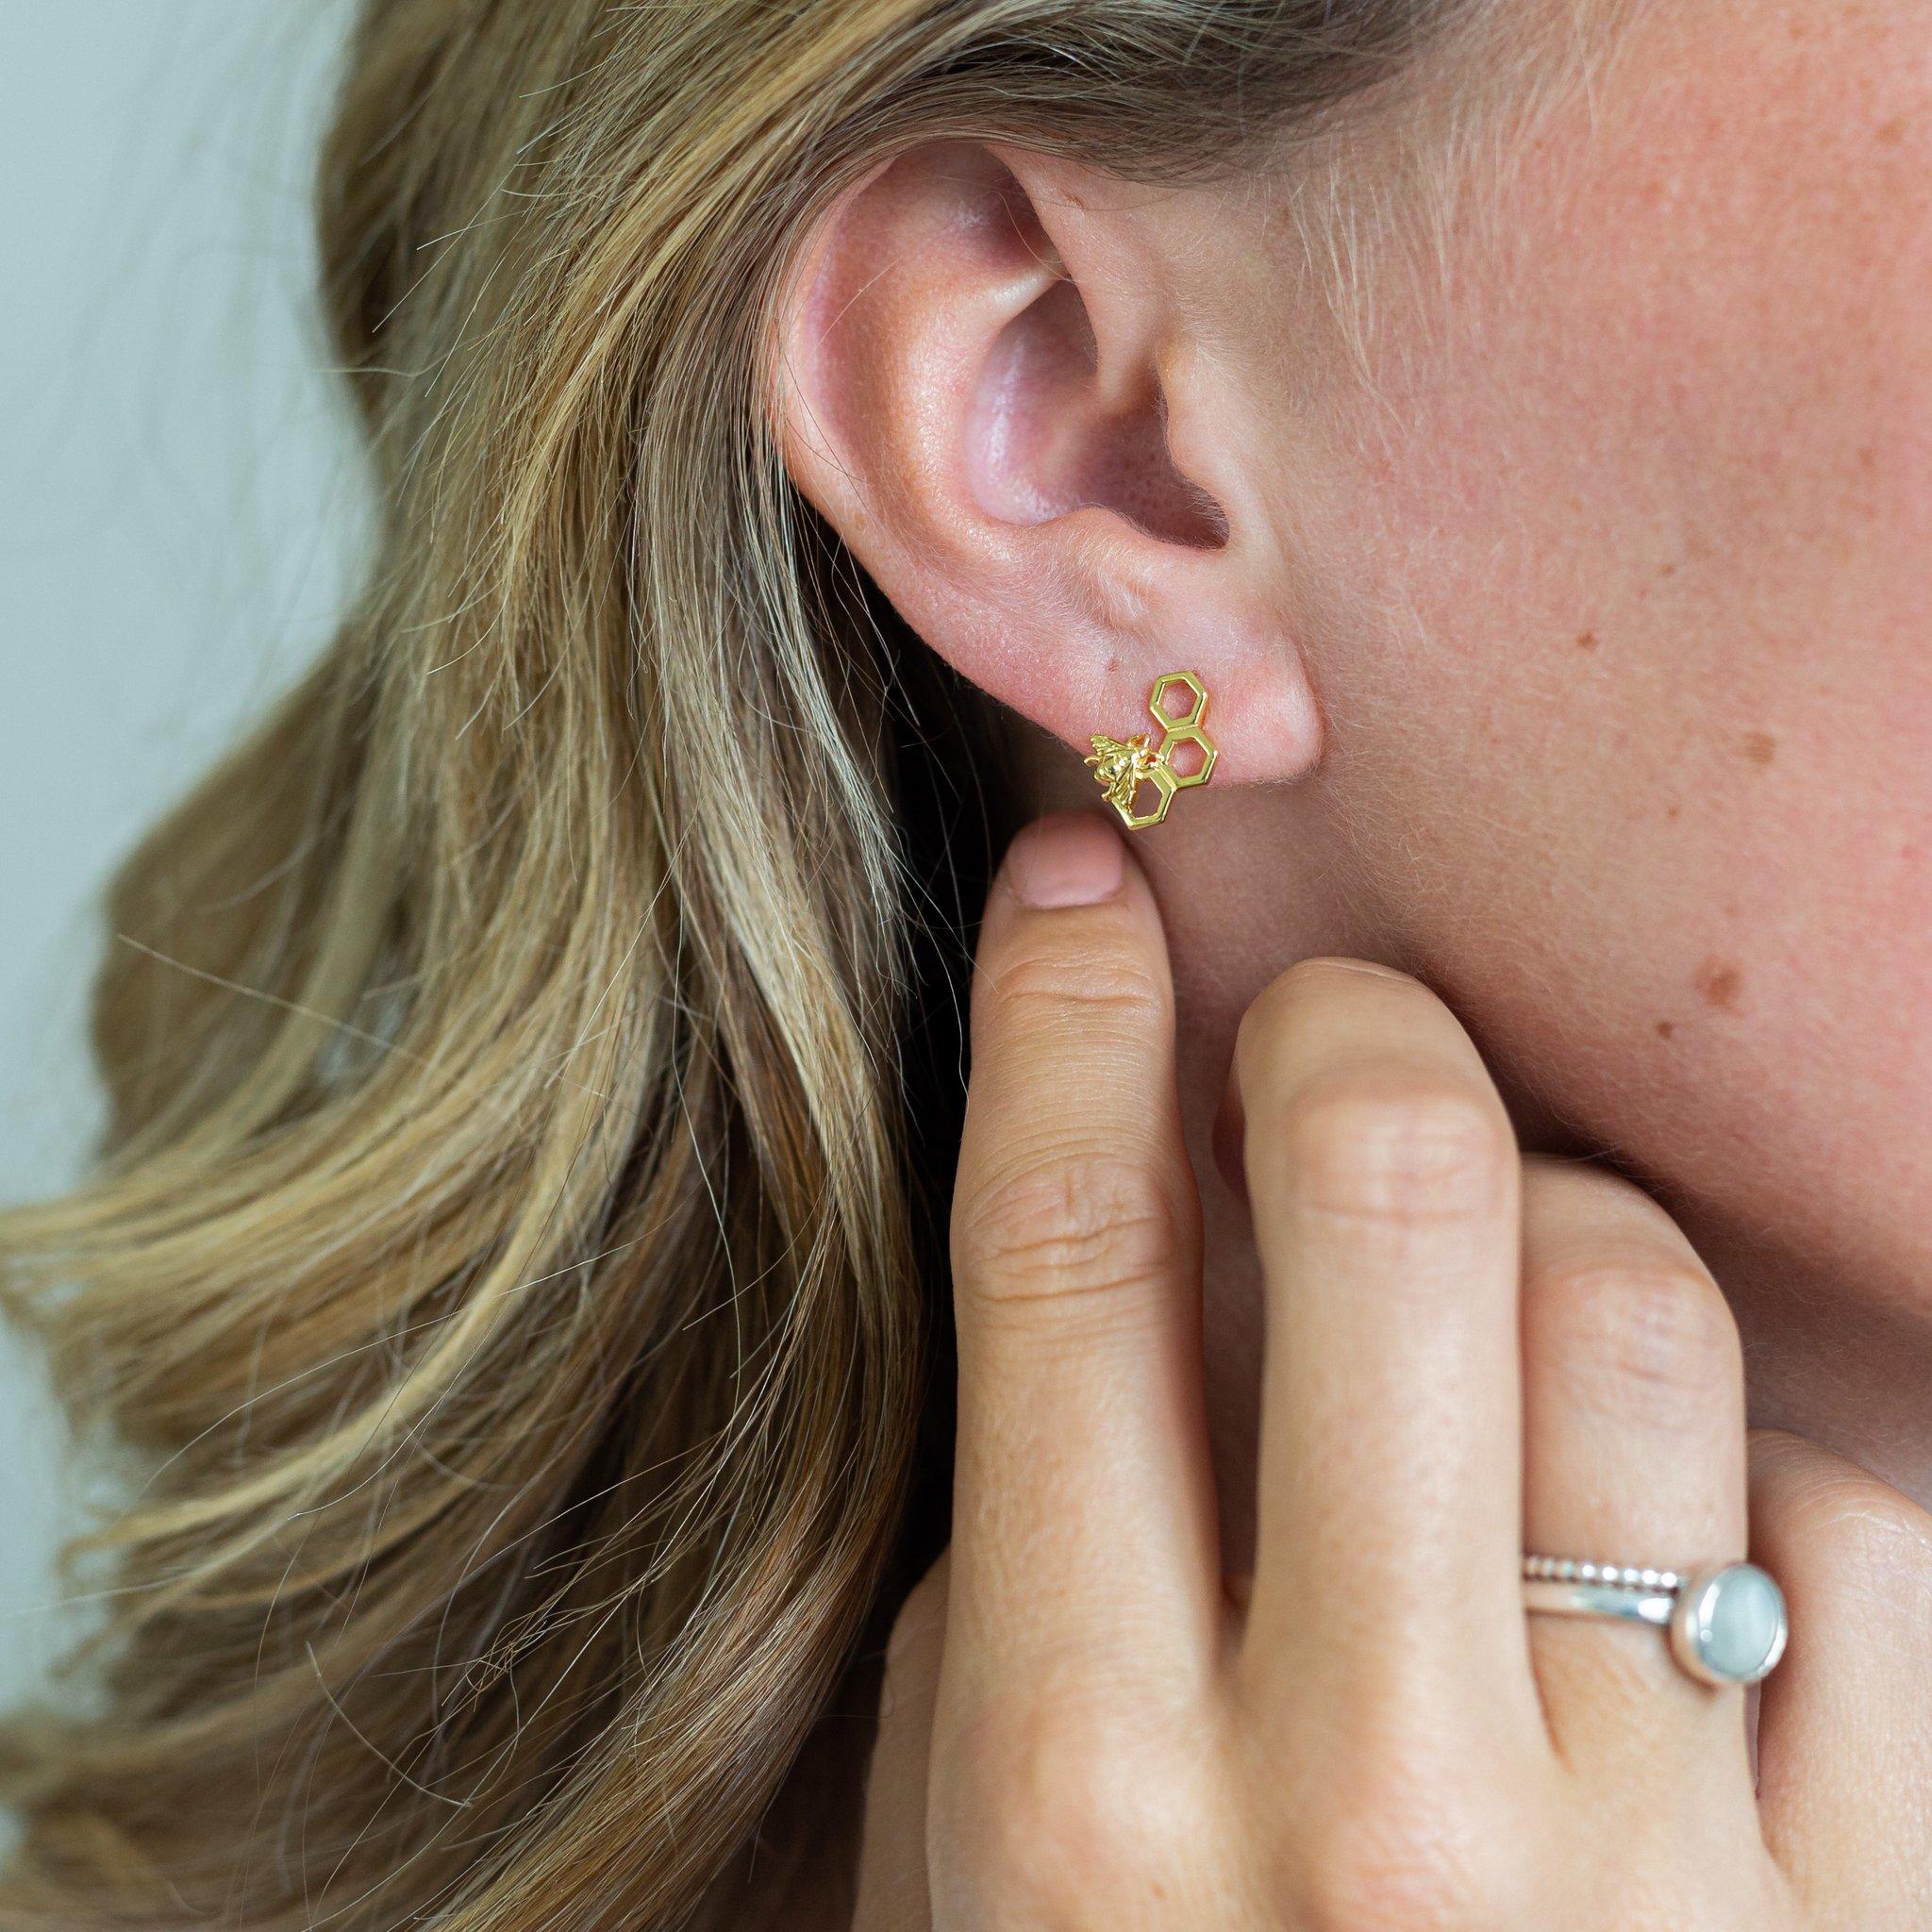 18ct Solid Gold Earrings  Hoops Studs  Drops  Auric Jewellery UK